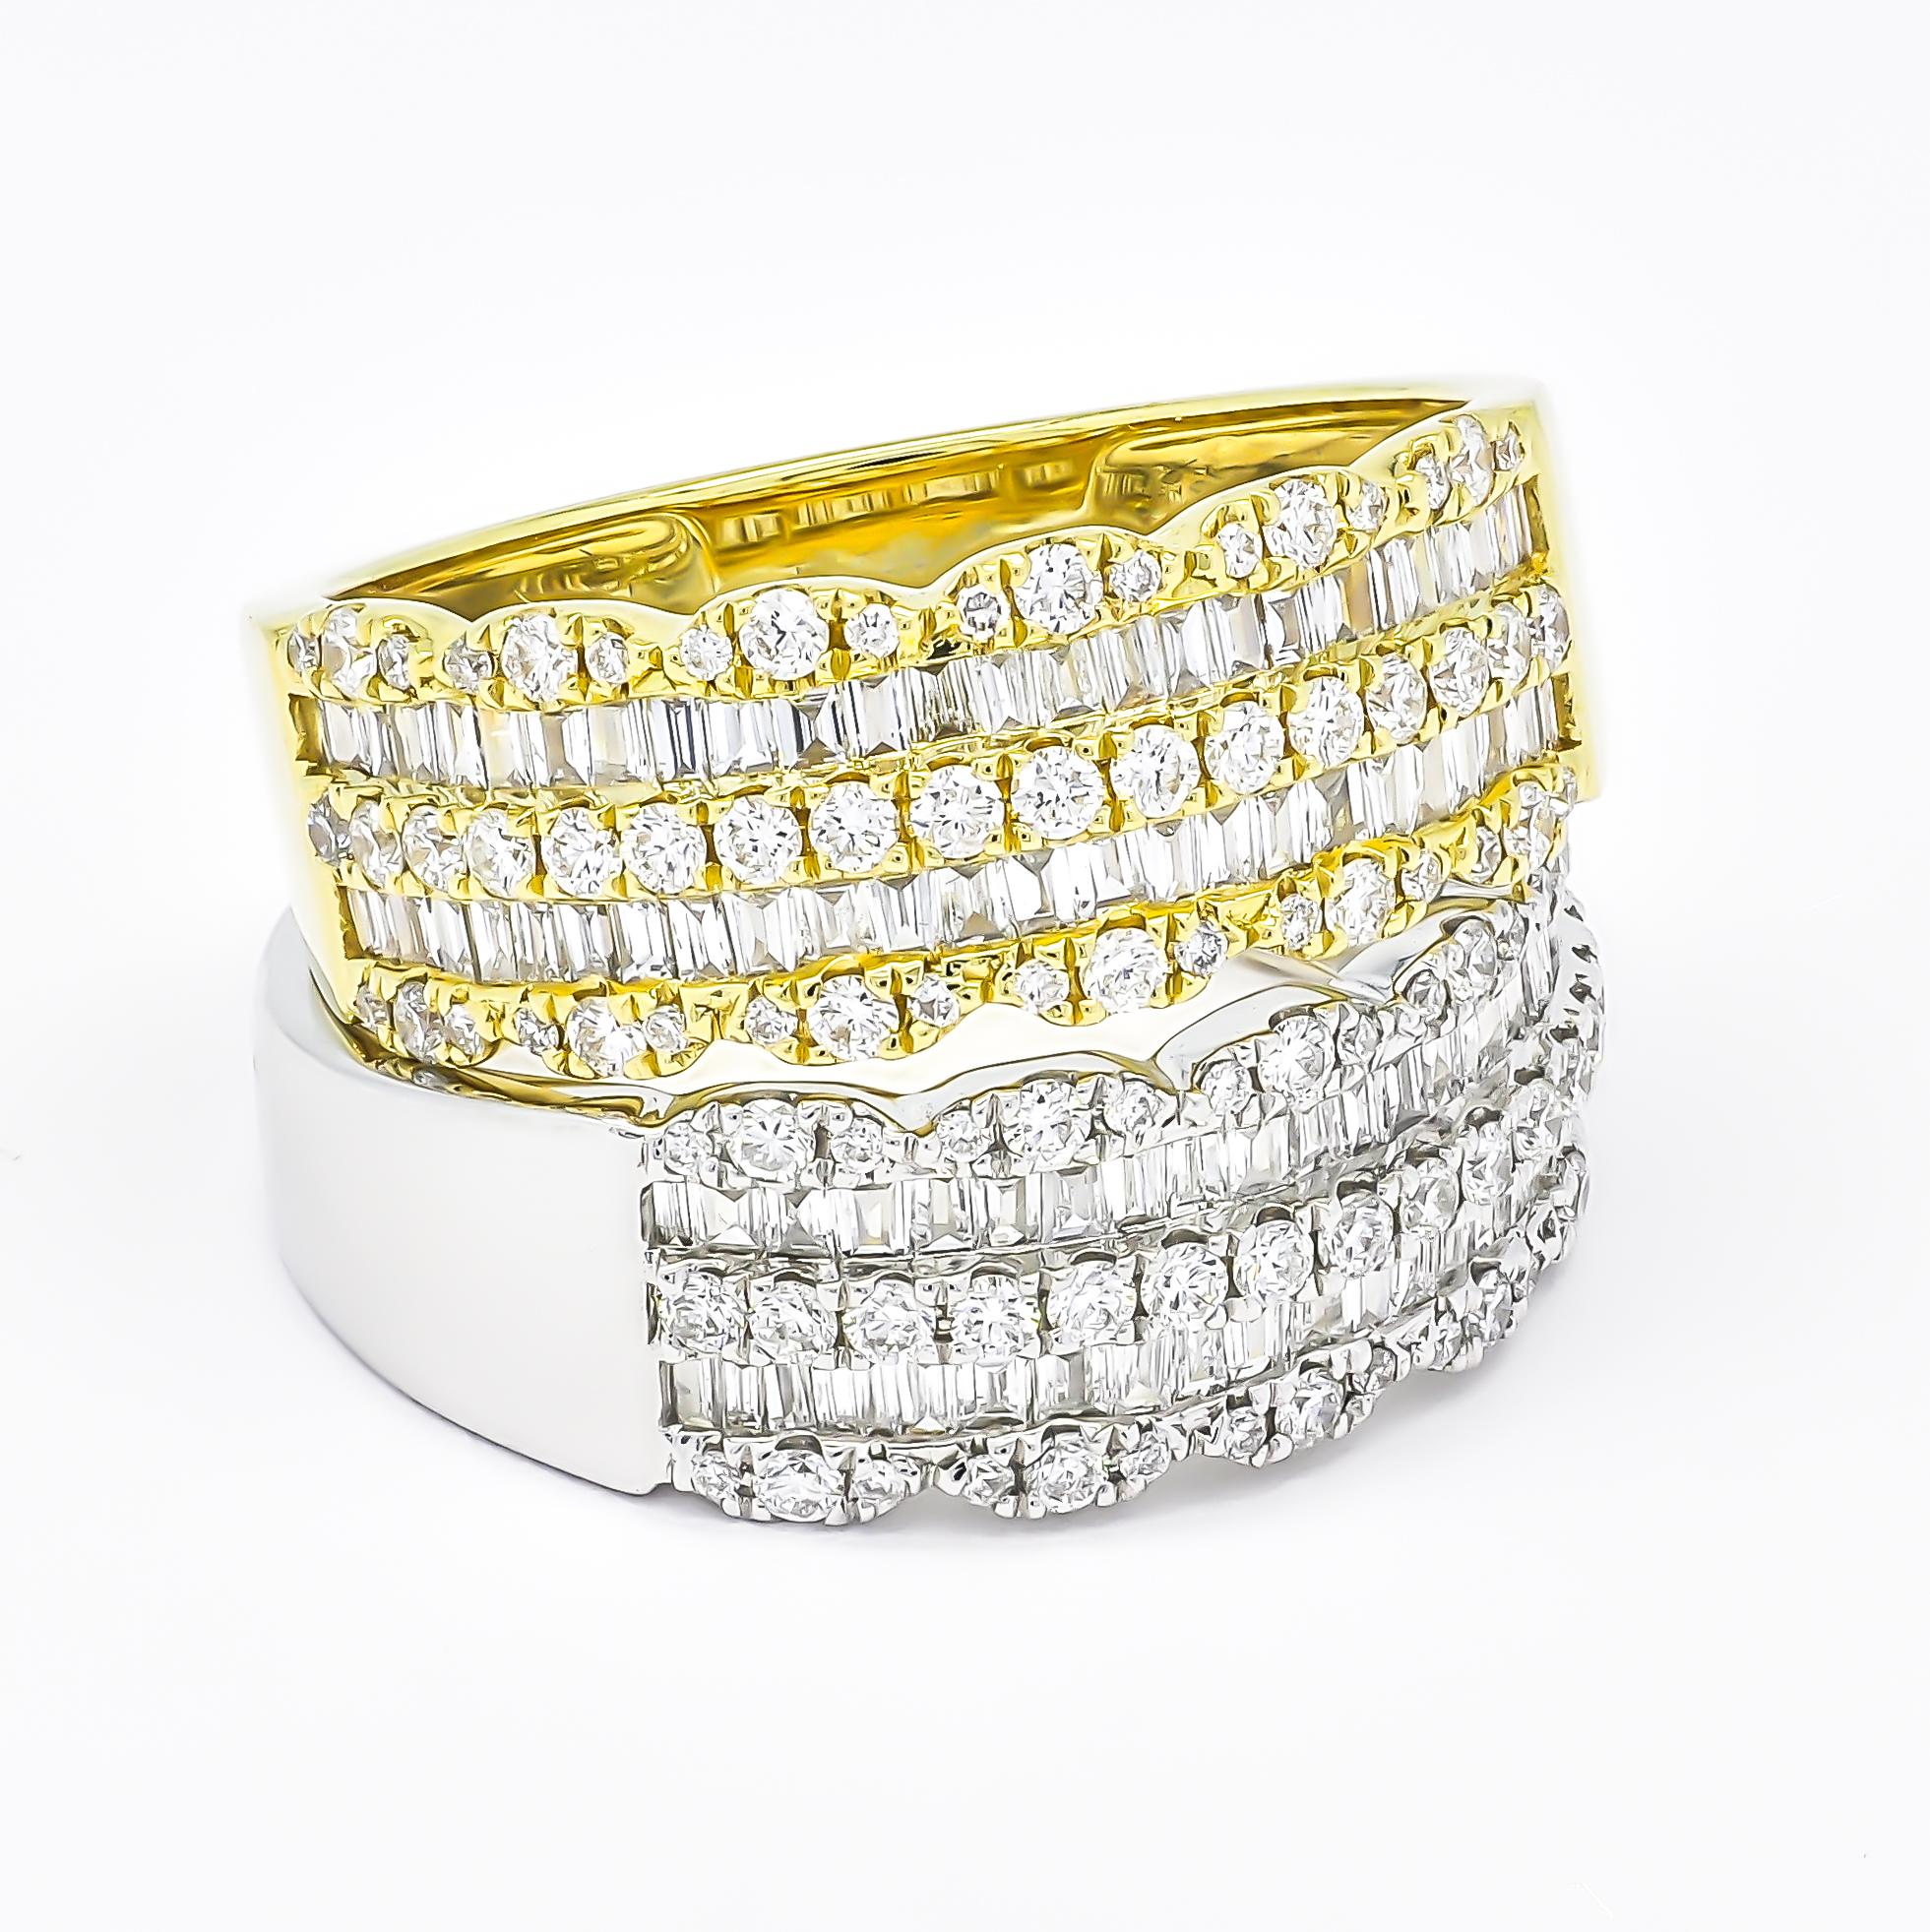 Women's Natural Diamond Ring 0.76 carat 18KT White Gold Cocktail Half Eternity Ring Band